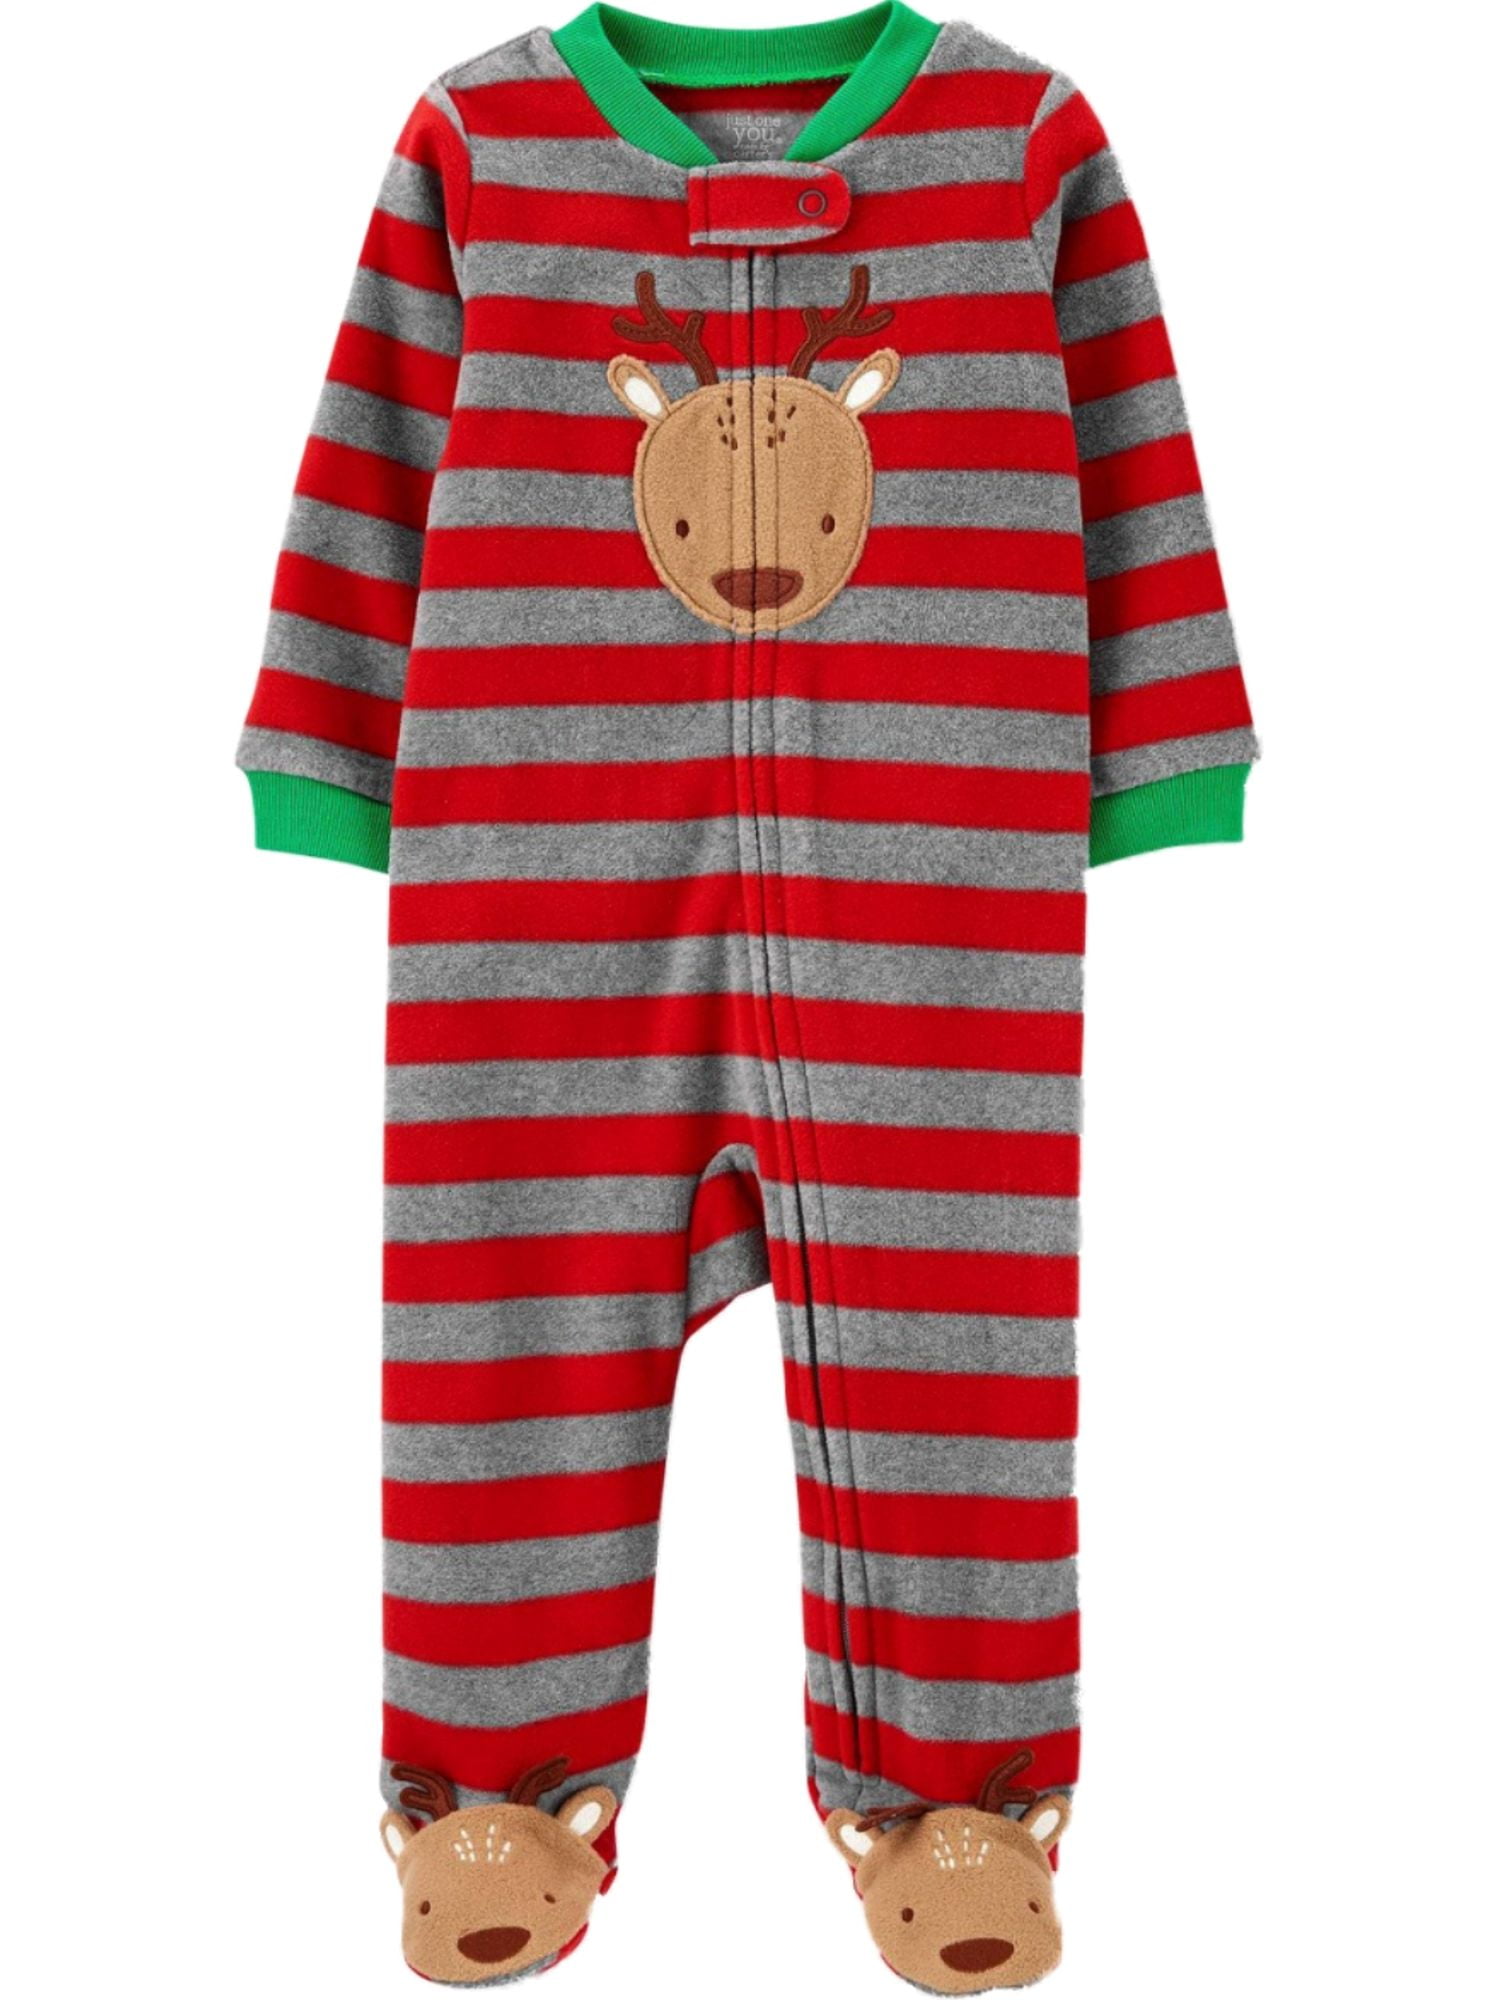 Carter's Infant Boys Red & Gray Striped Reindeer Christmas Footie Sleeper Pajamas 3m Walmart